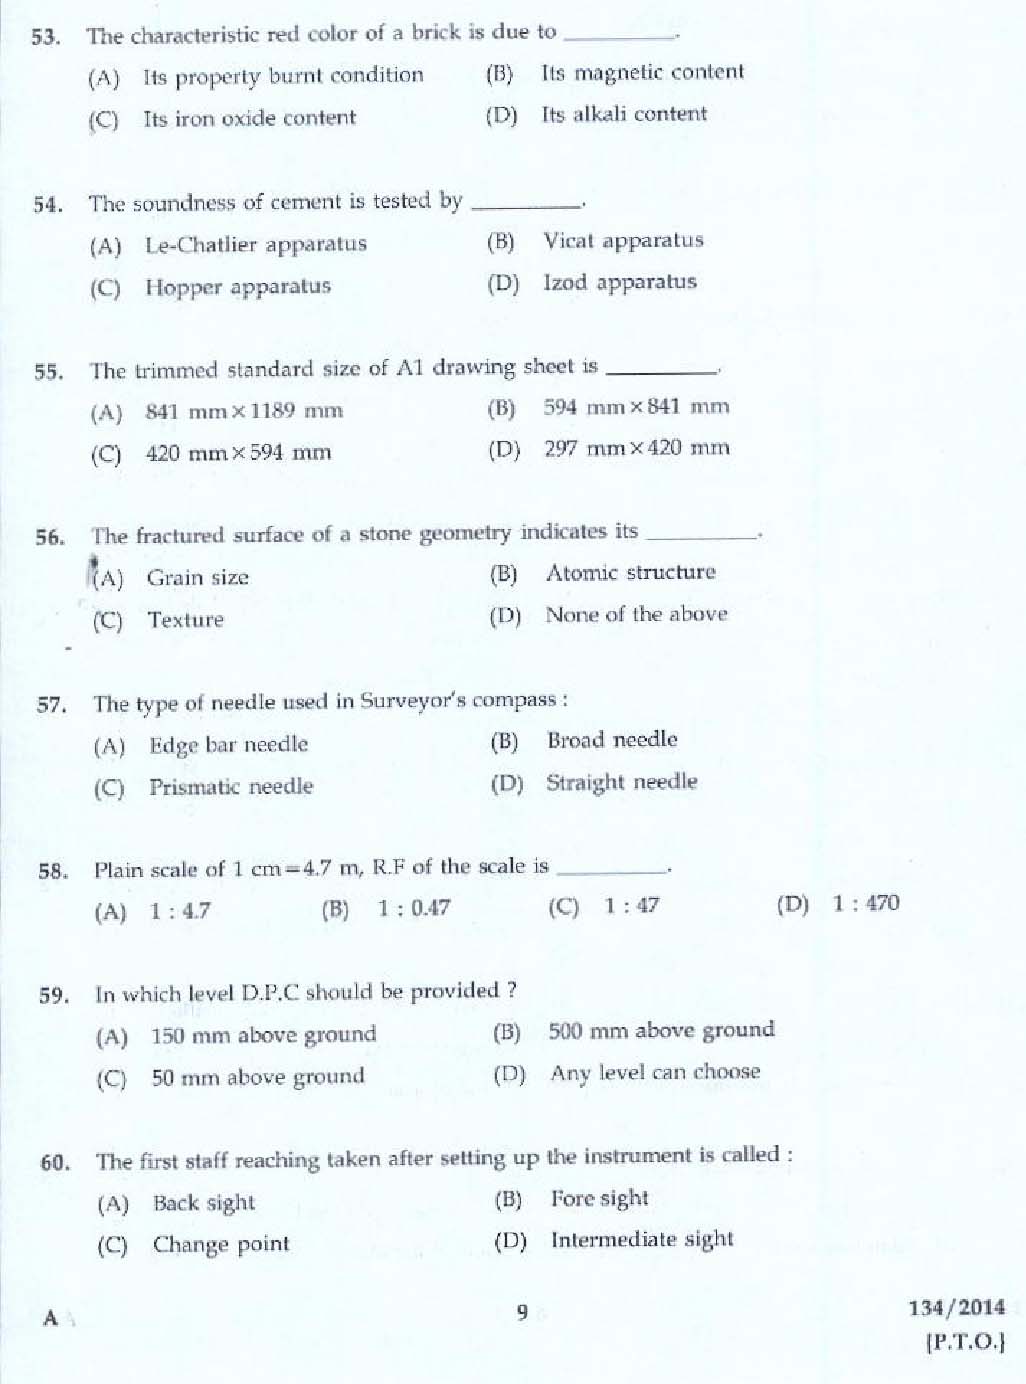 Kerala PSC Work Superintendent Exam Code 1342014 7